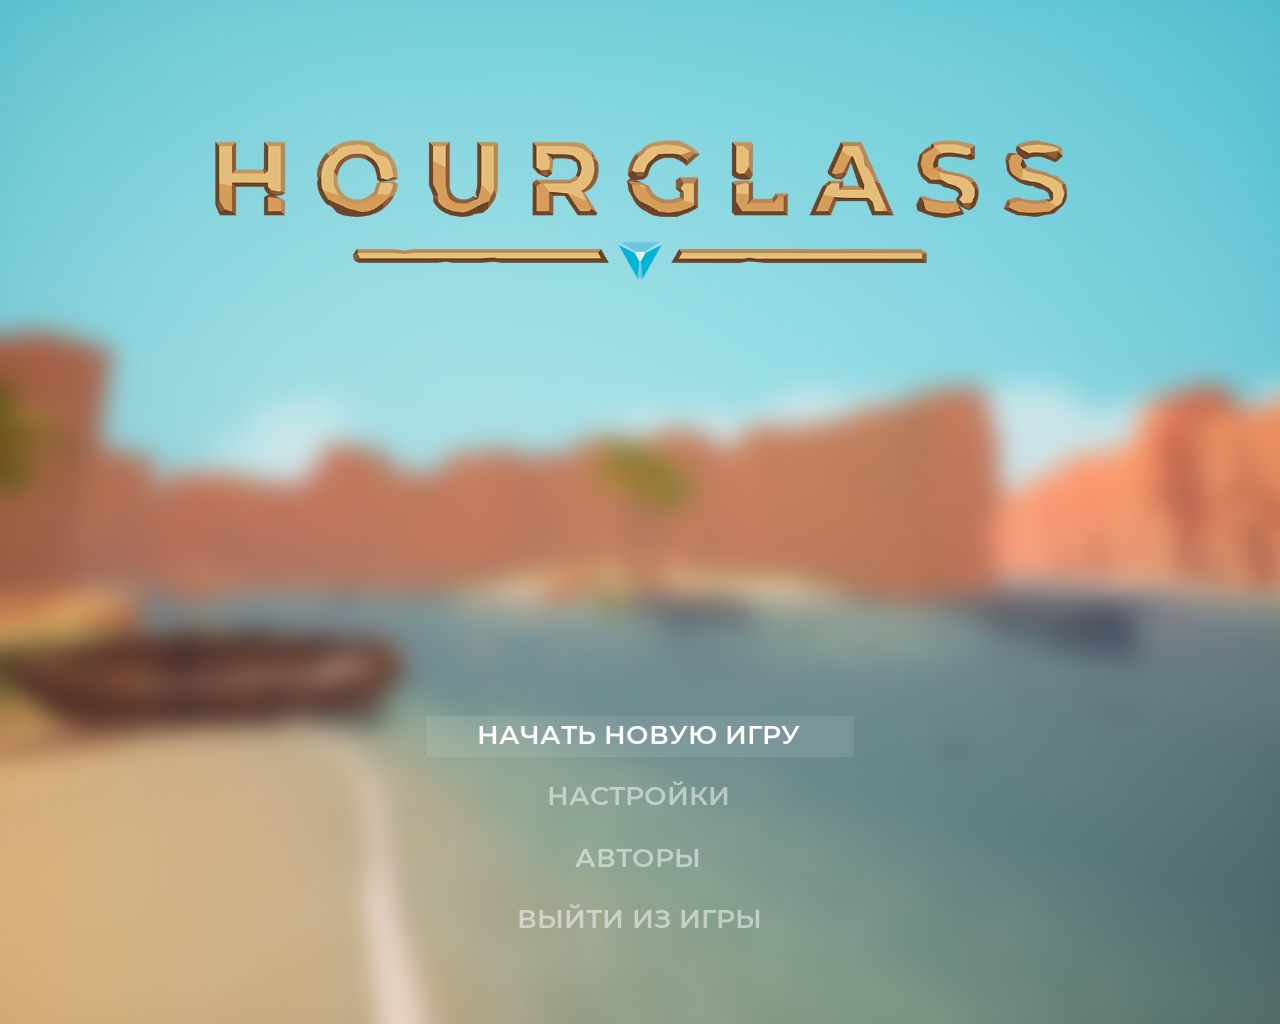 Hourglass-Win64-Shipping 2021-10-27 04-35-47-88.bmp.jpg